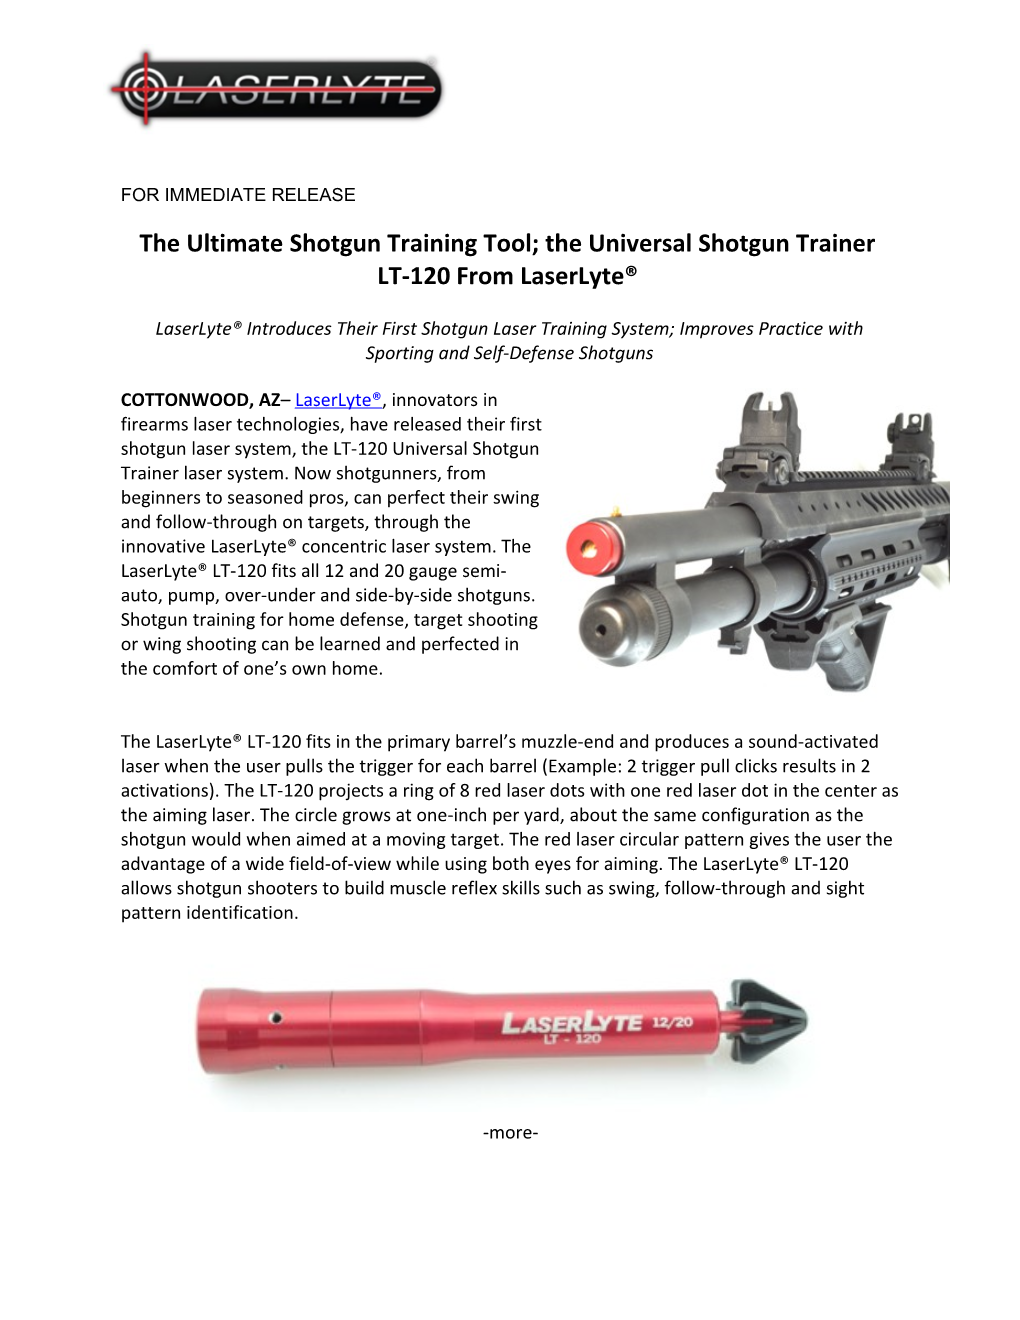 The Ultimate Shotgun Training Tool; the Universal Shotgun Trainer